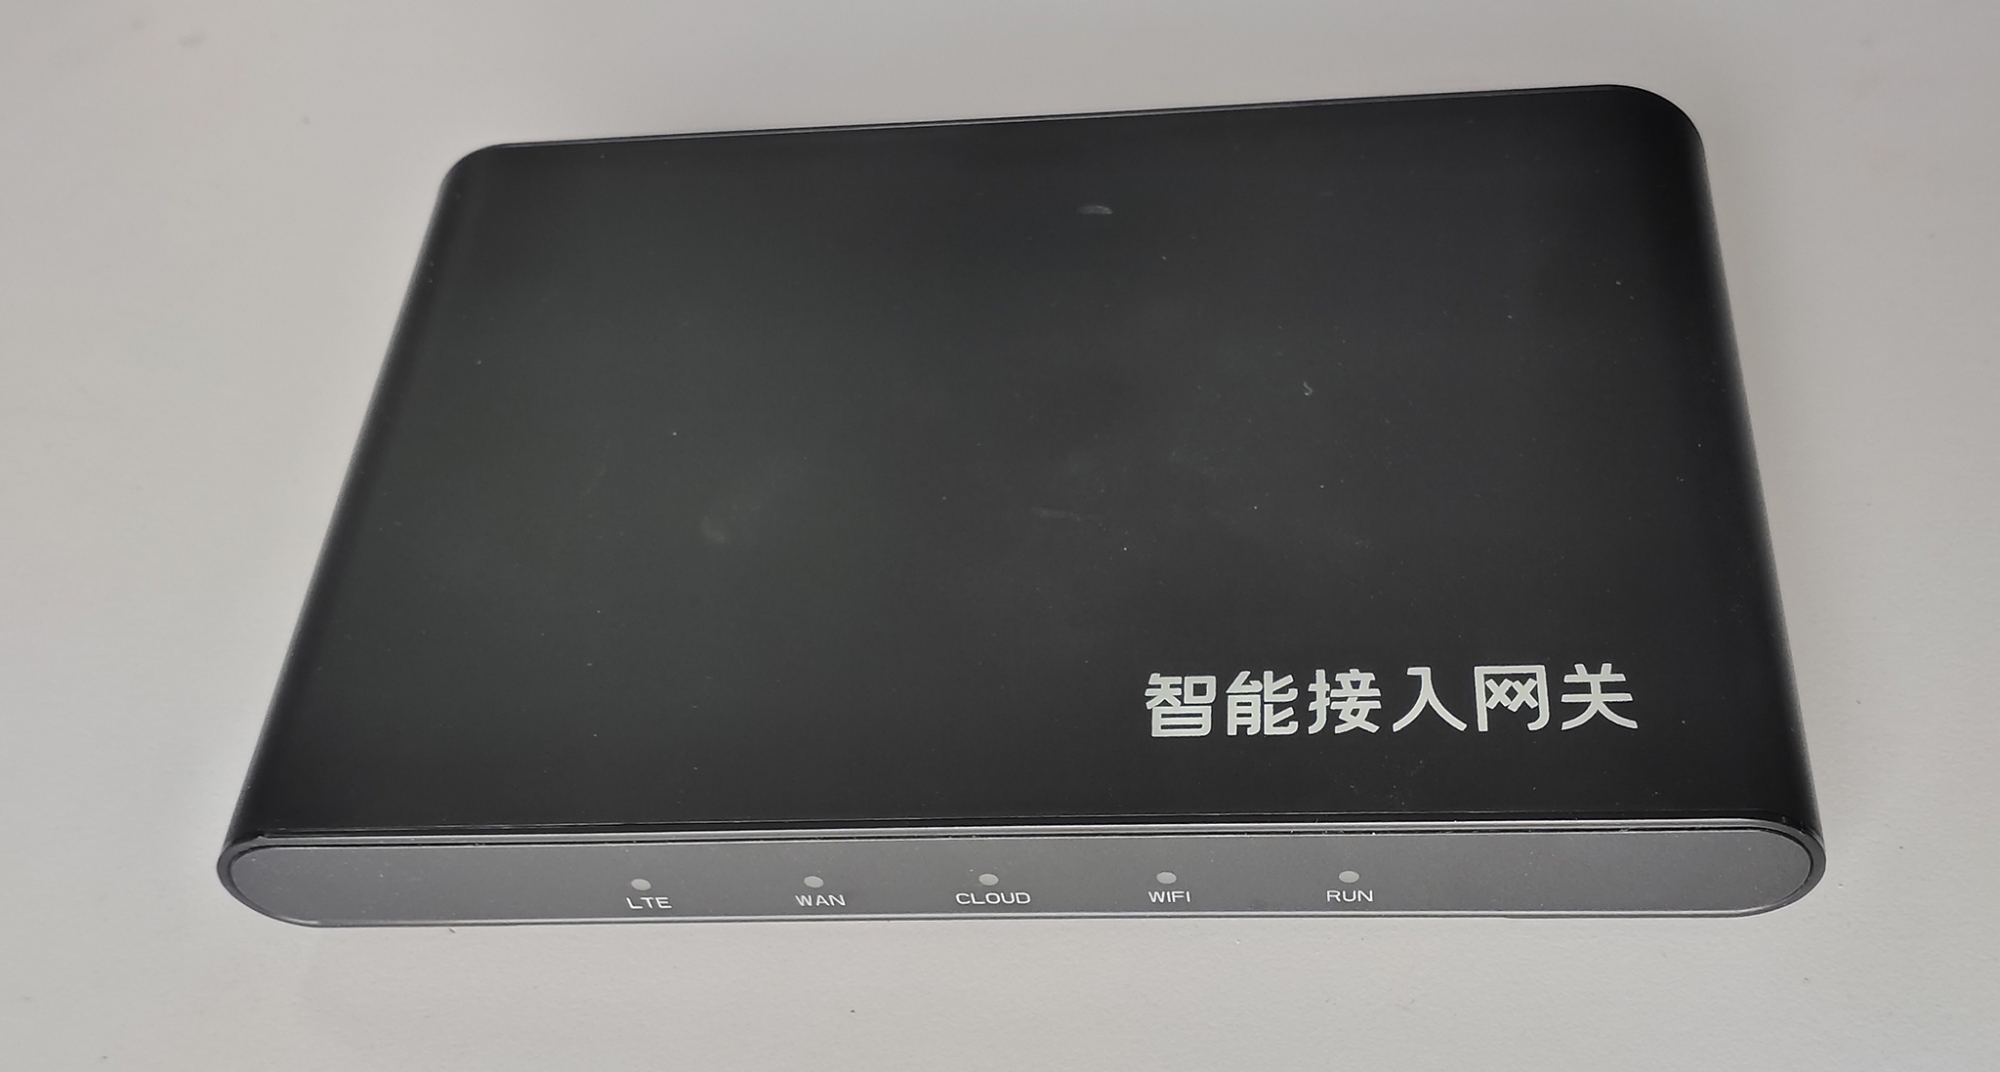 SAG-100WMの外観 (ちなみにデバイスの上部に記載されている「智能接入网关」を英語にすると「Smart Access Gateway」となります)